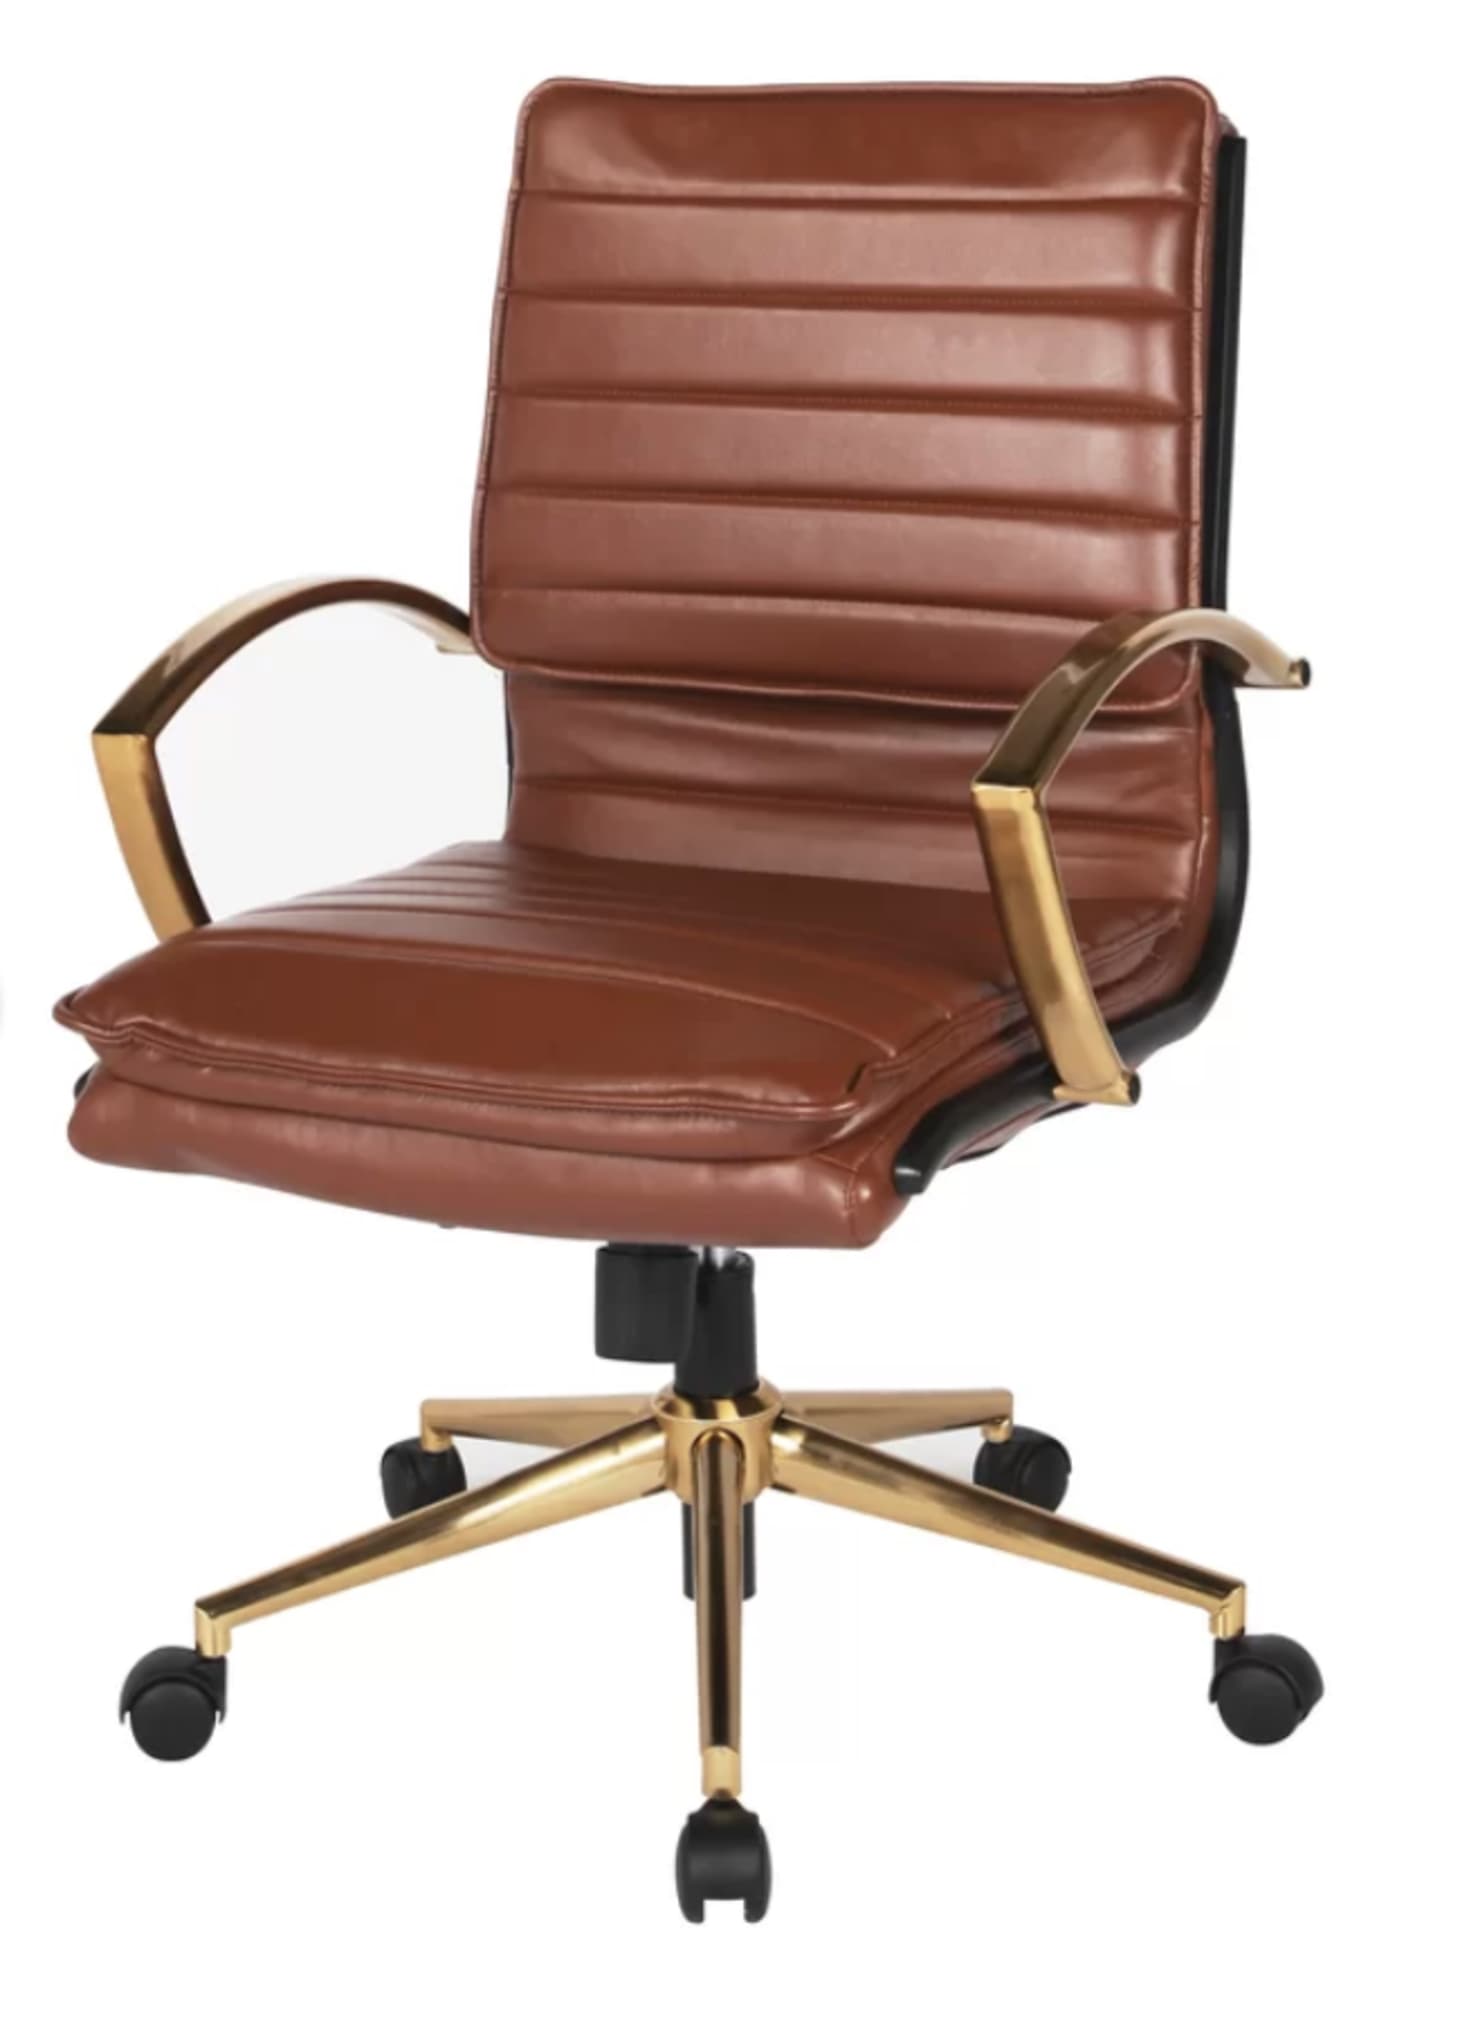 All Modern Opheim Chair